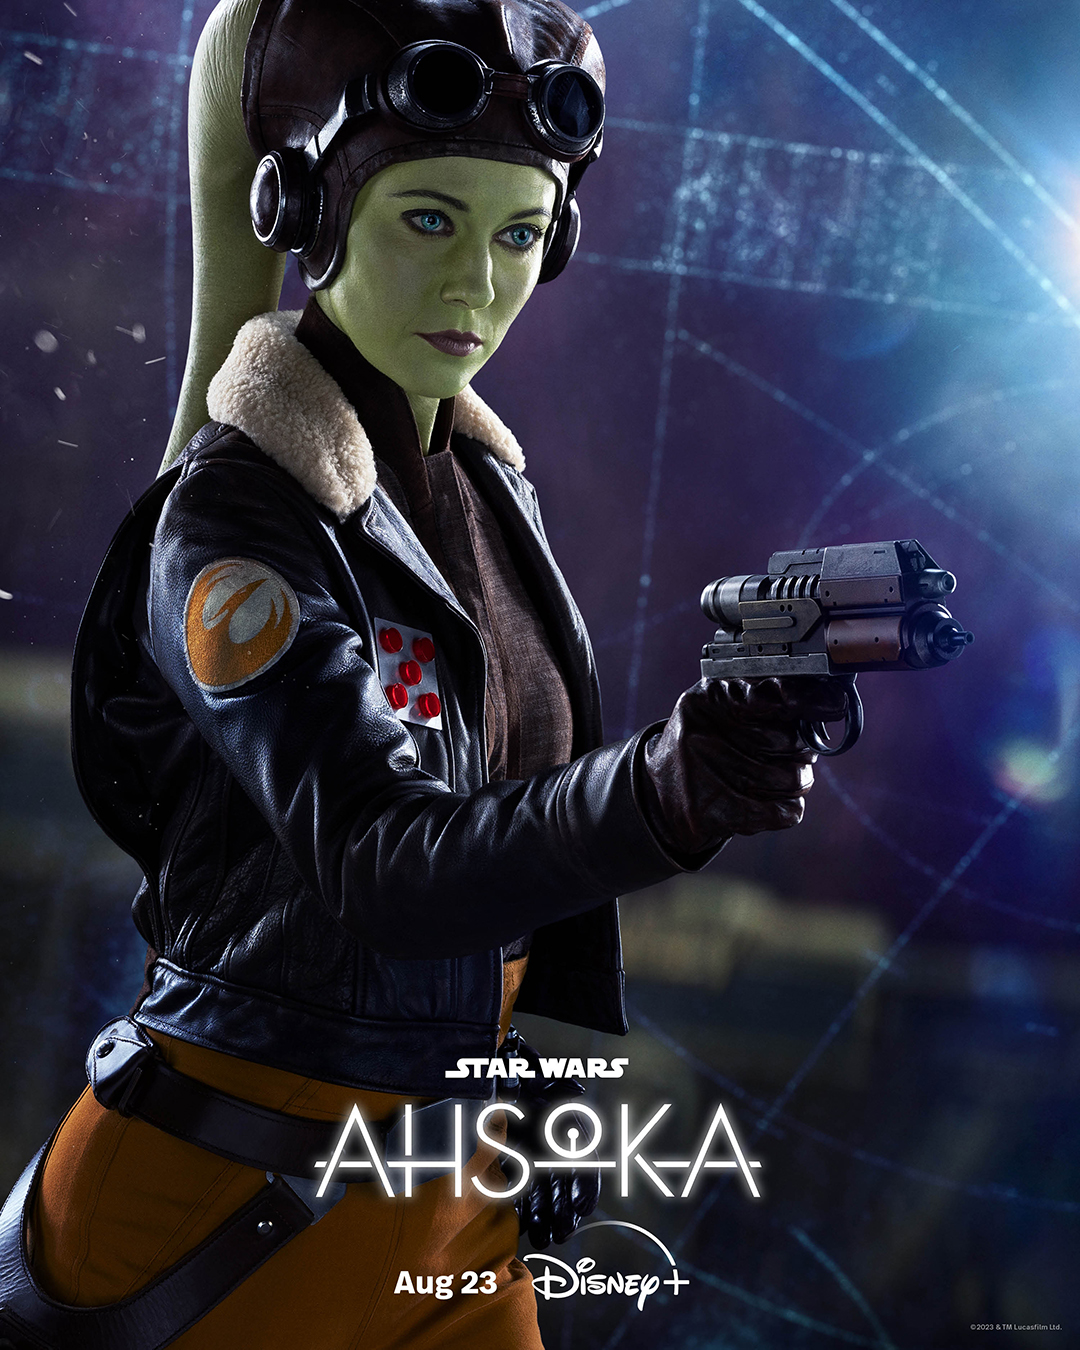 Hera Character Poster for the Ahsoka series